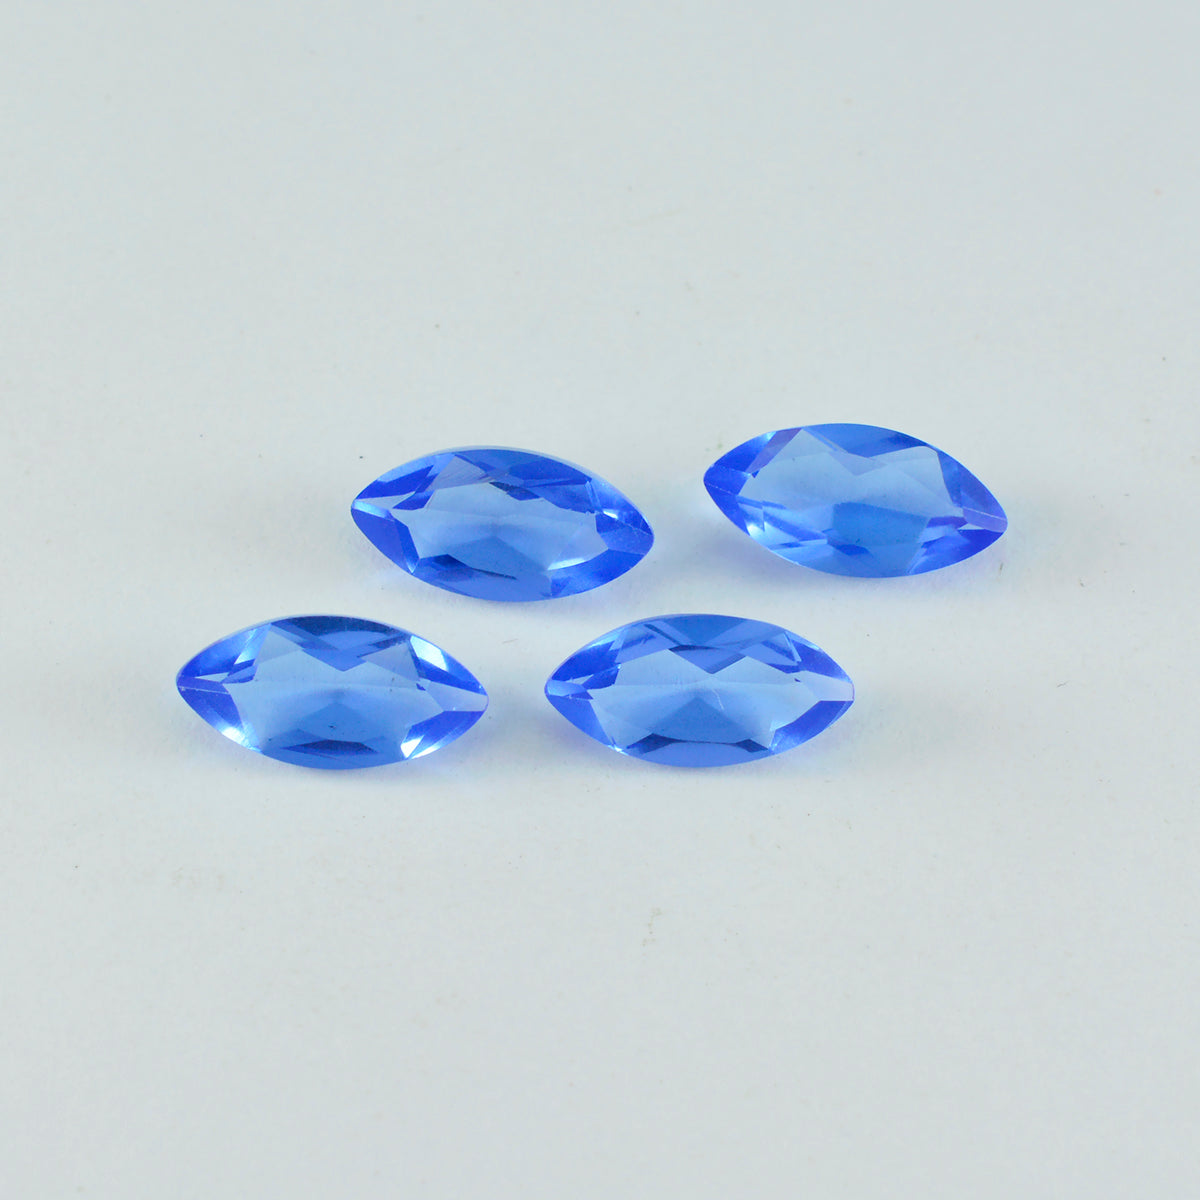 Riyogems 1PC Blue Sapphire CZ Faceted 8x16 mm Marquise Shape amazing Quality Stone